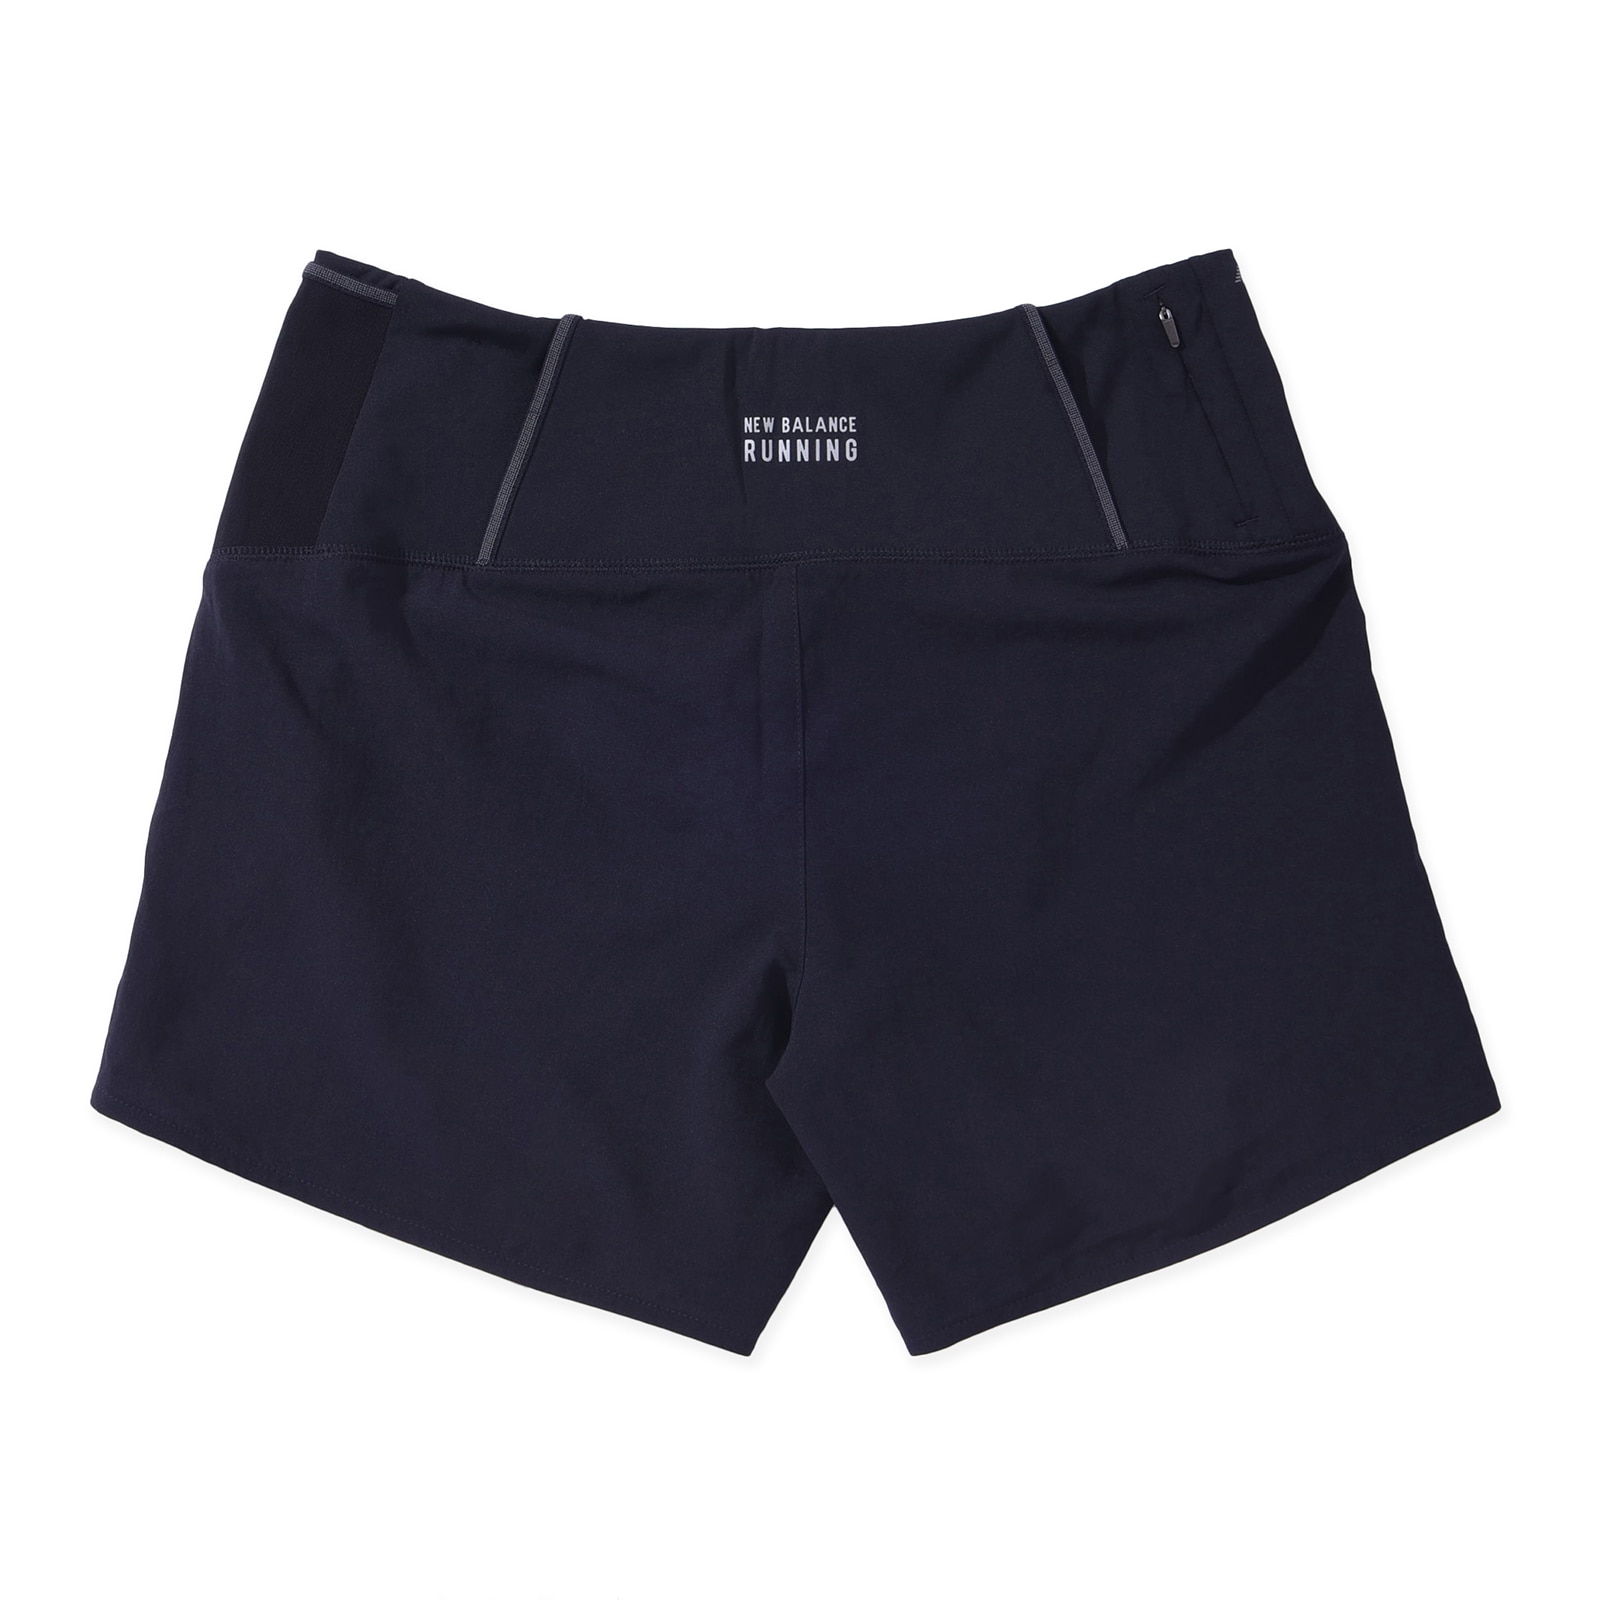 Impact Exclusive 5 inch shorts (no underwear)